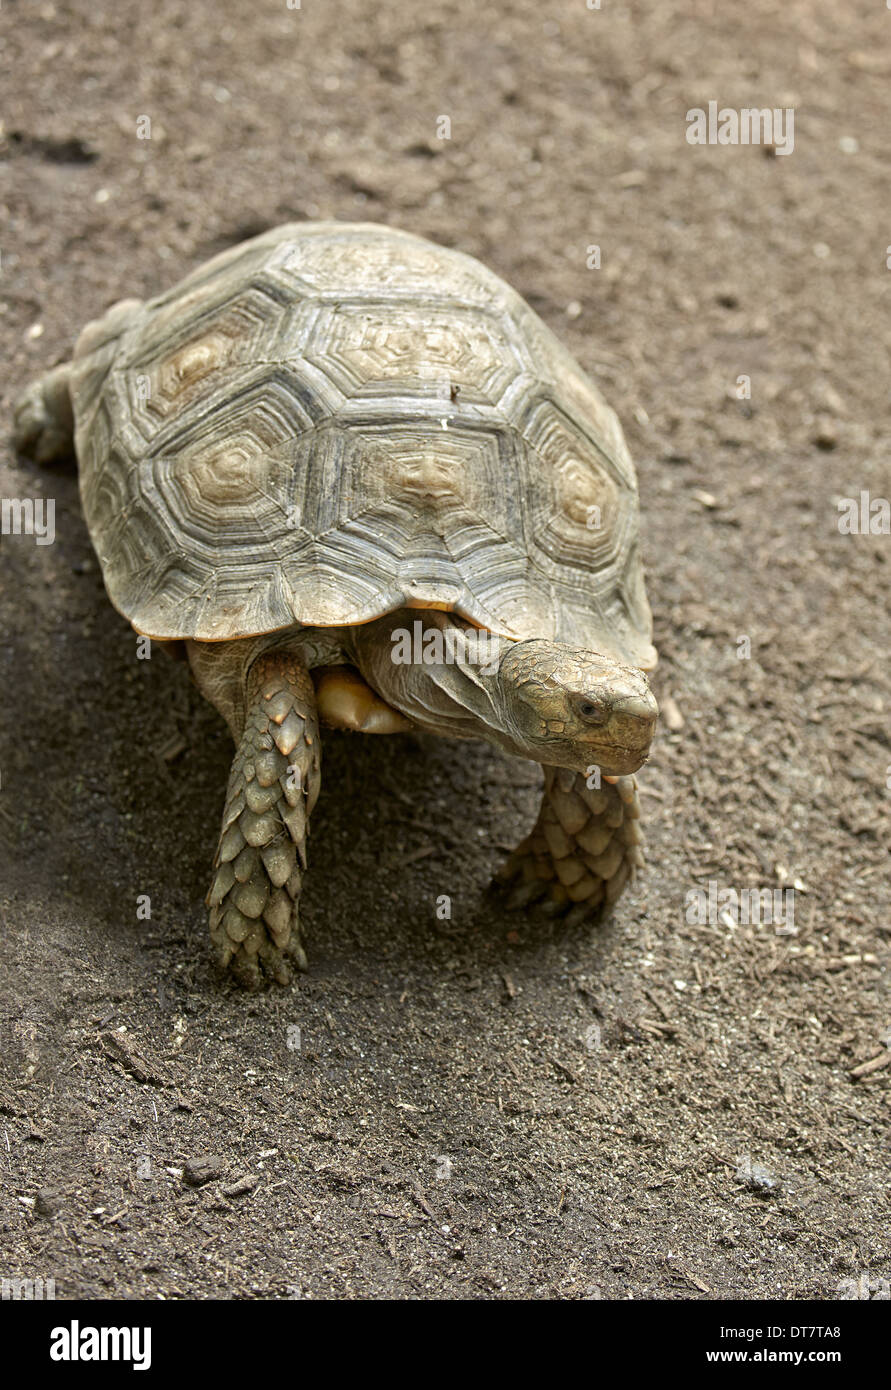 Asian Forest Tortoise (Manouria emys) adult, Singapore Zoo Stock Photo